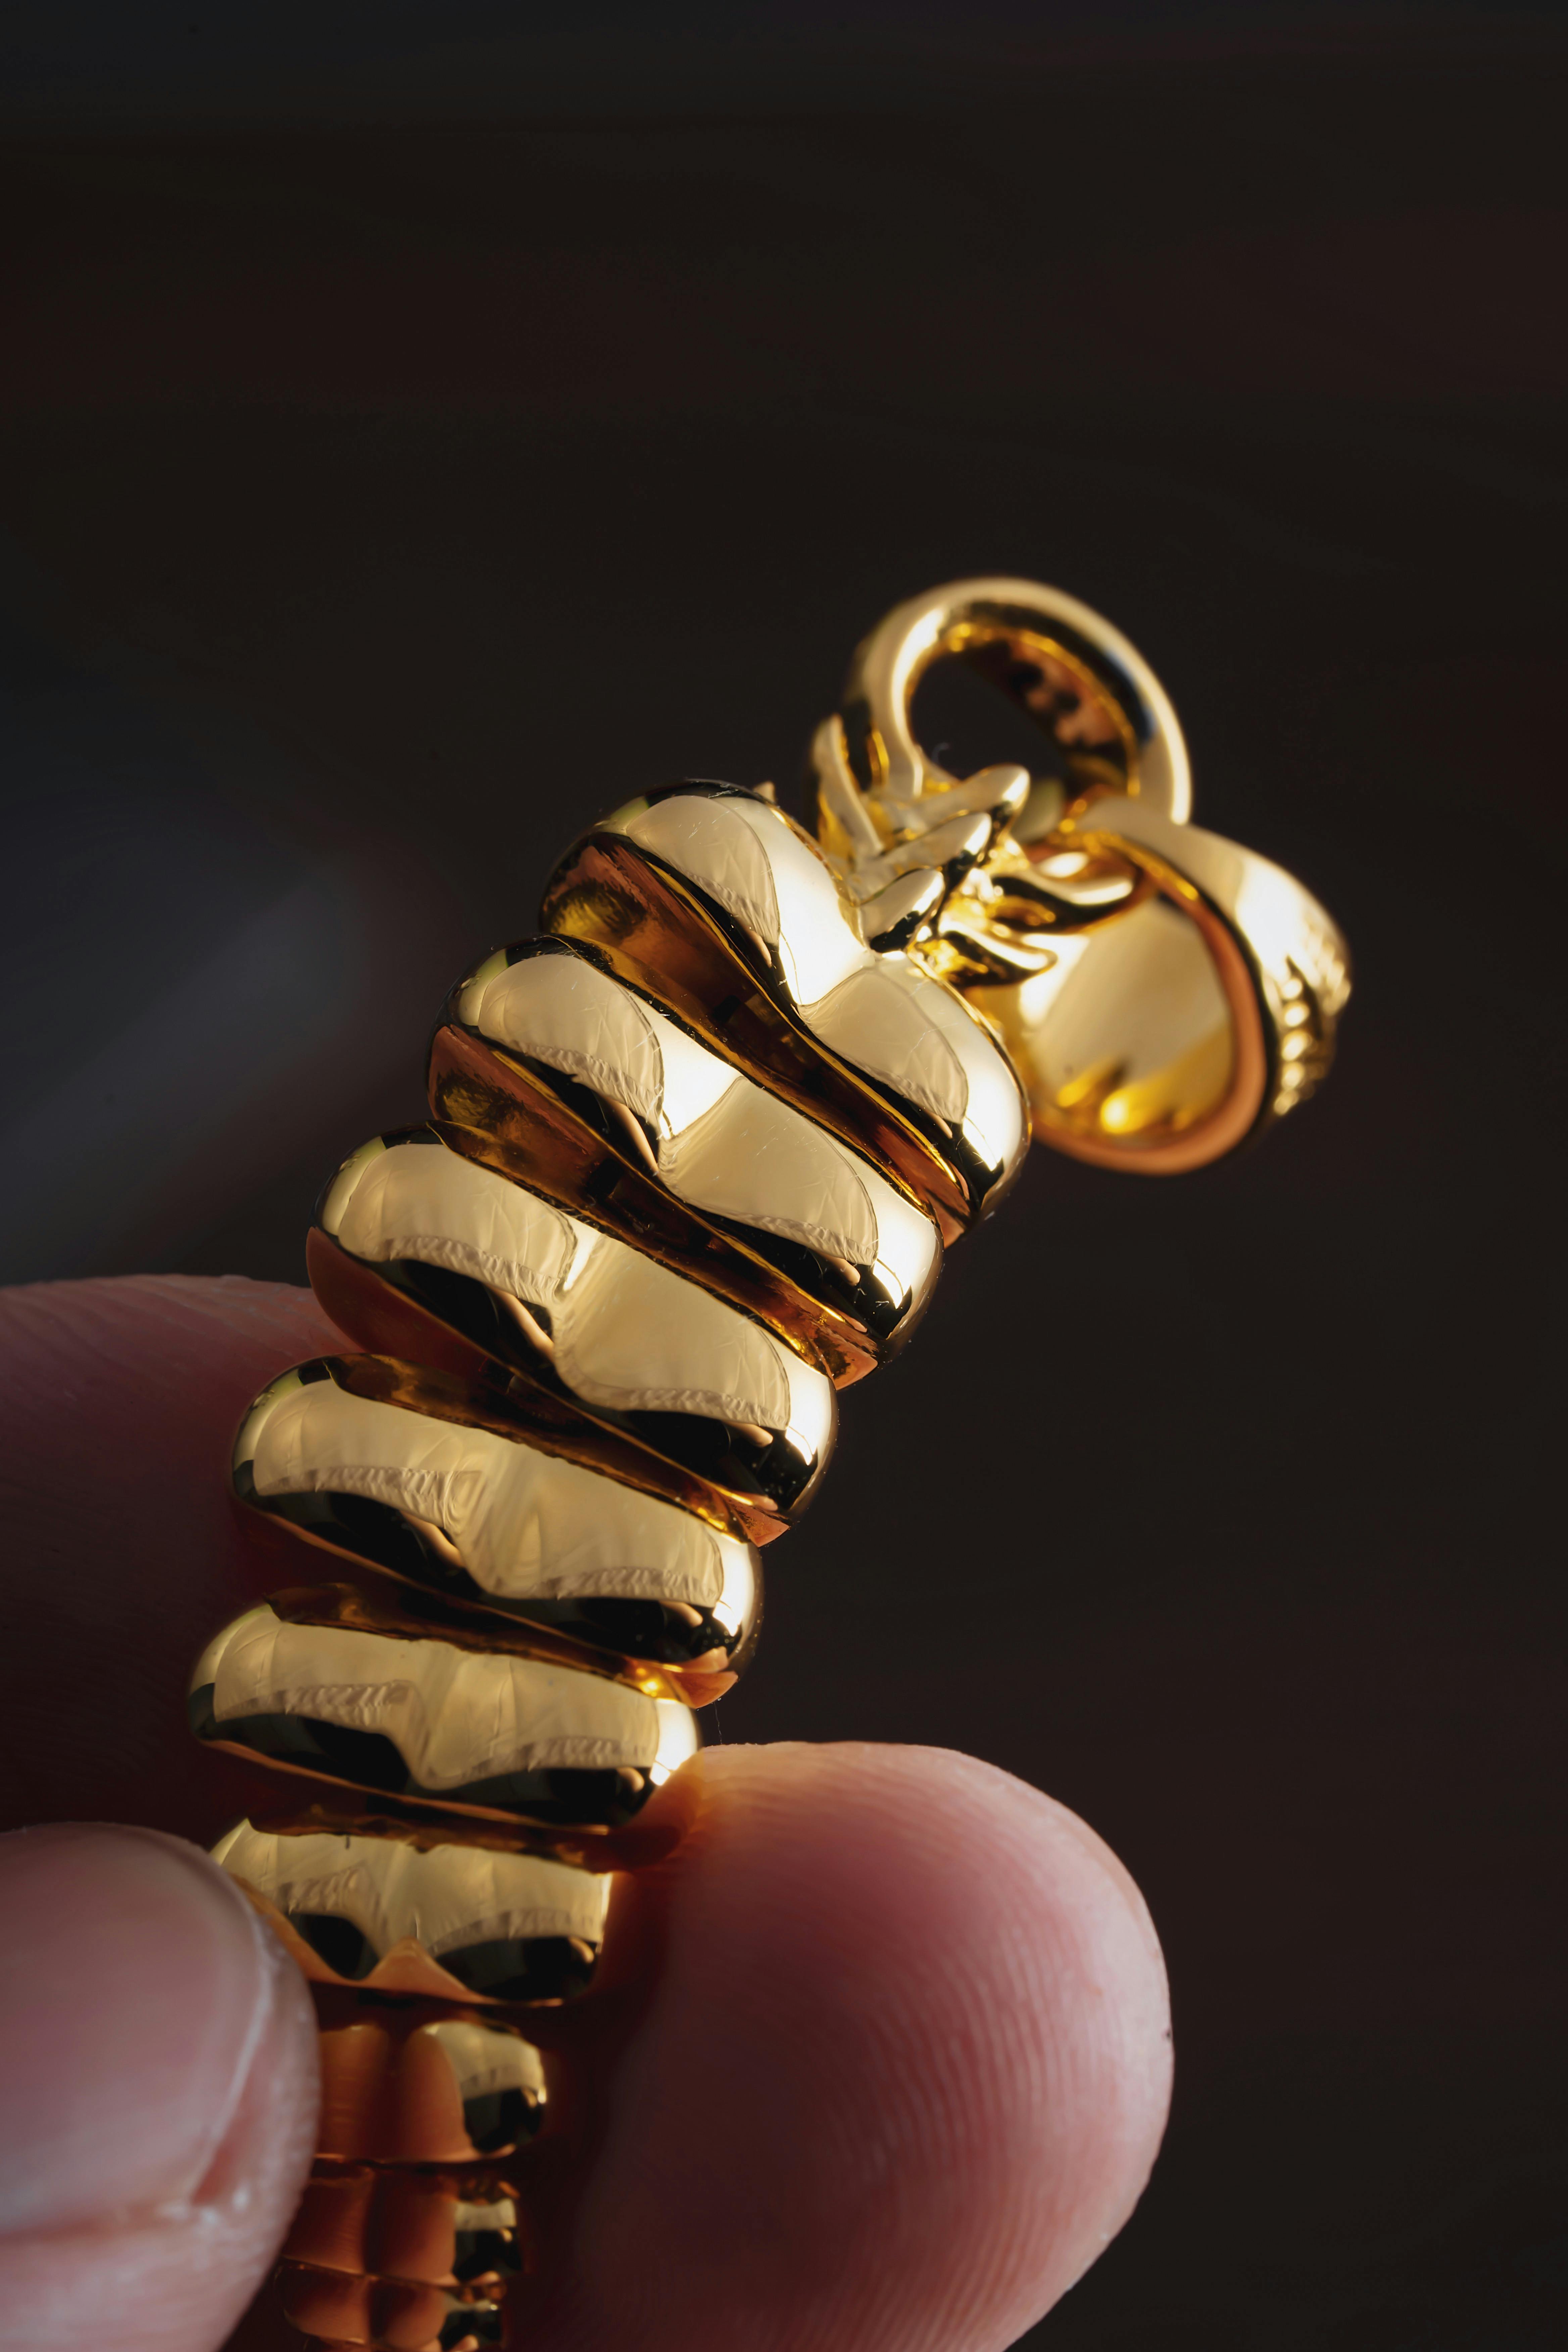 free photo of golden rattlesnake tail pendant in hand